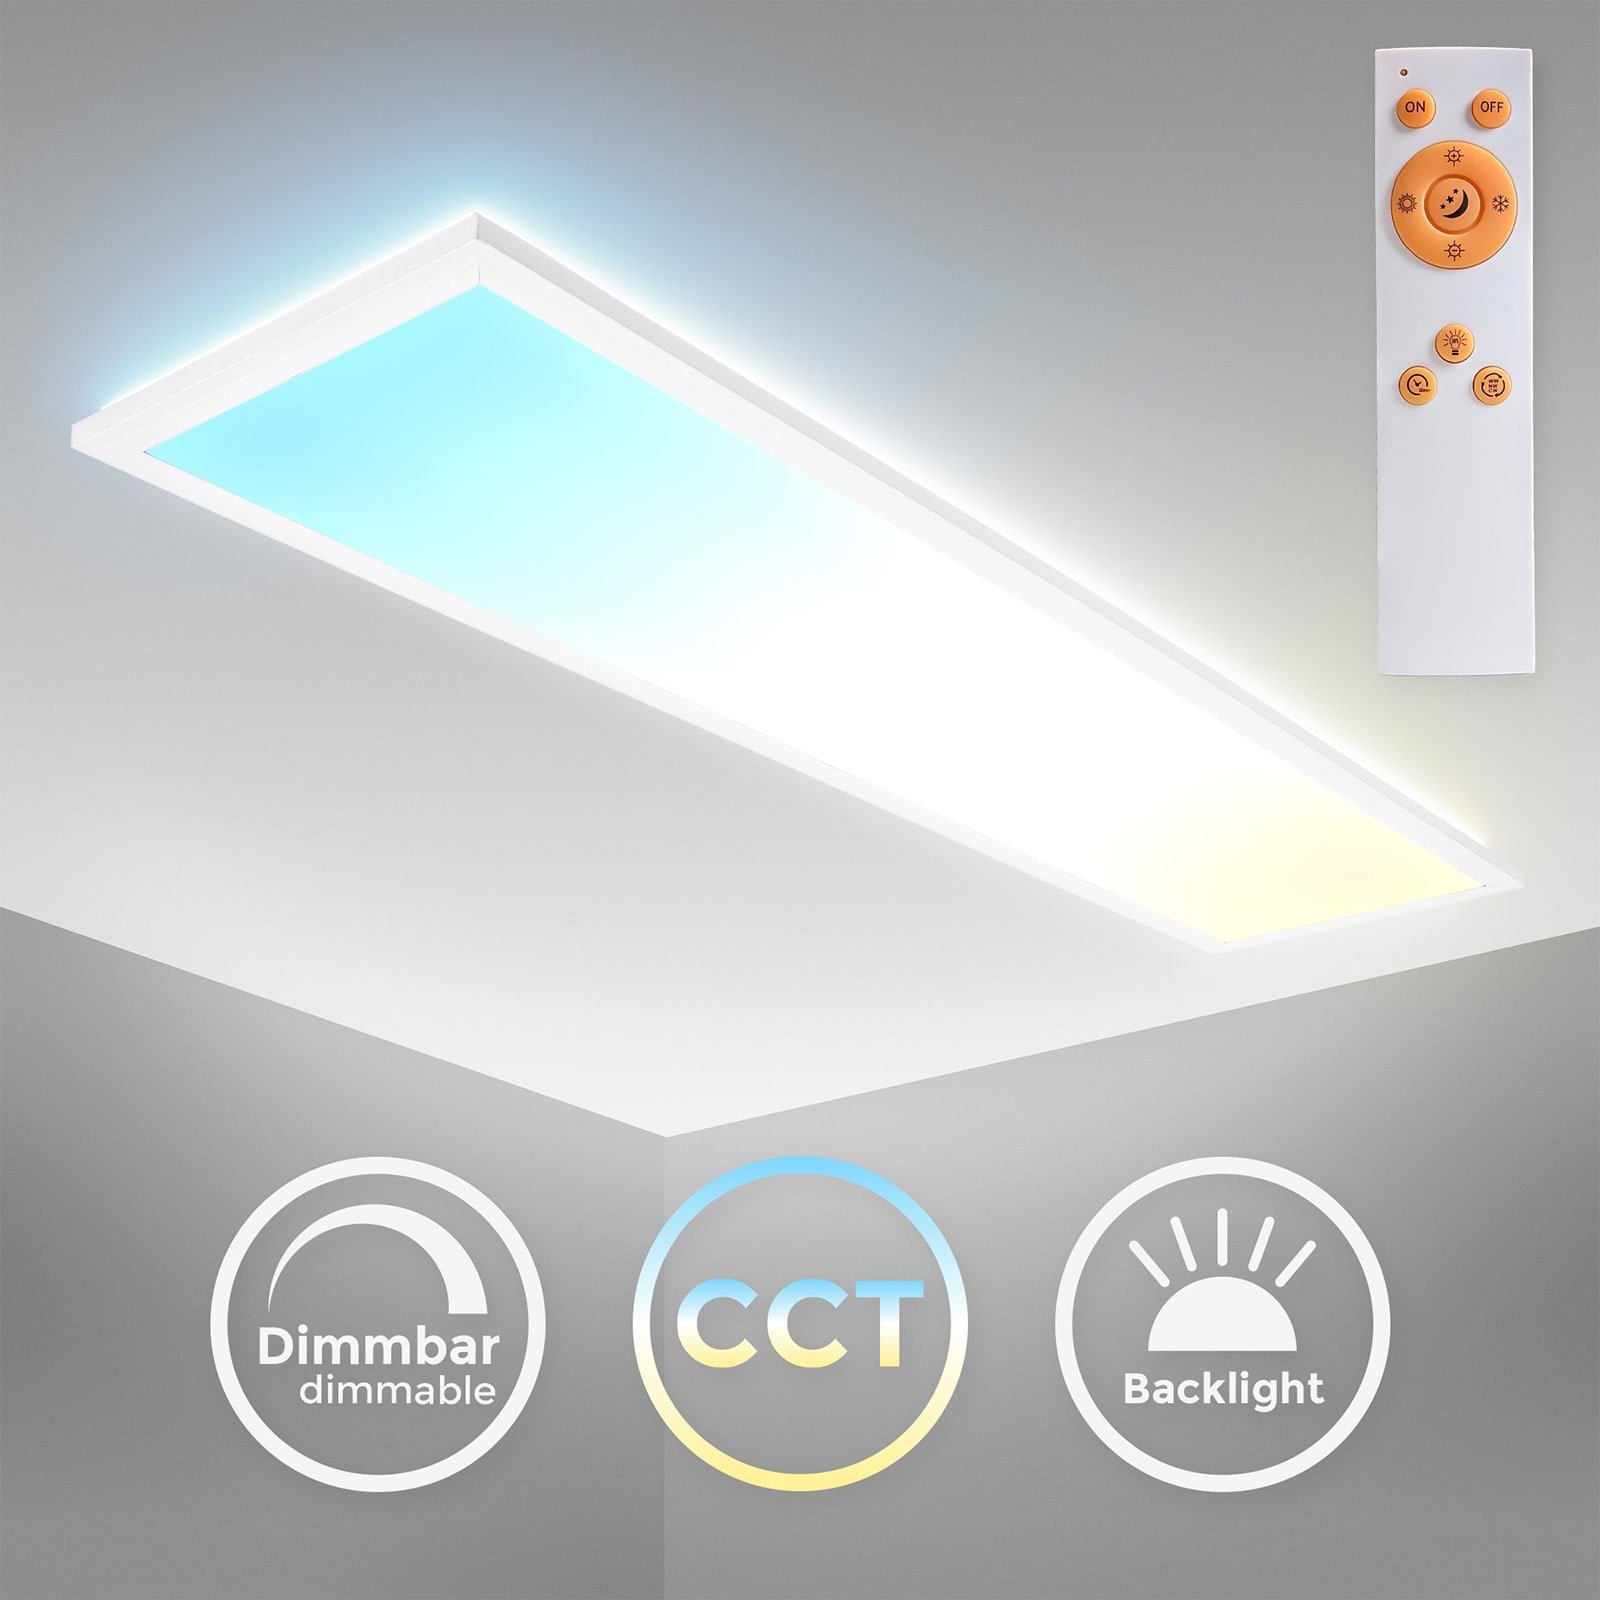 LED Panel CCT, 100x25cm, Backlight, weiß, dimmbar, Fernbedienung - 1